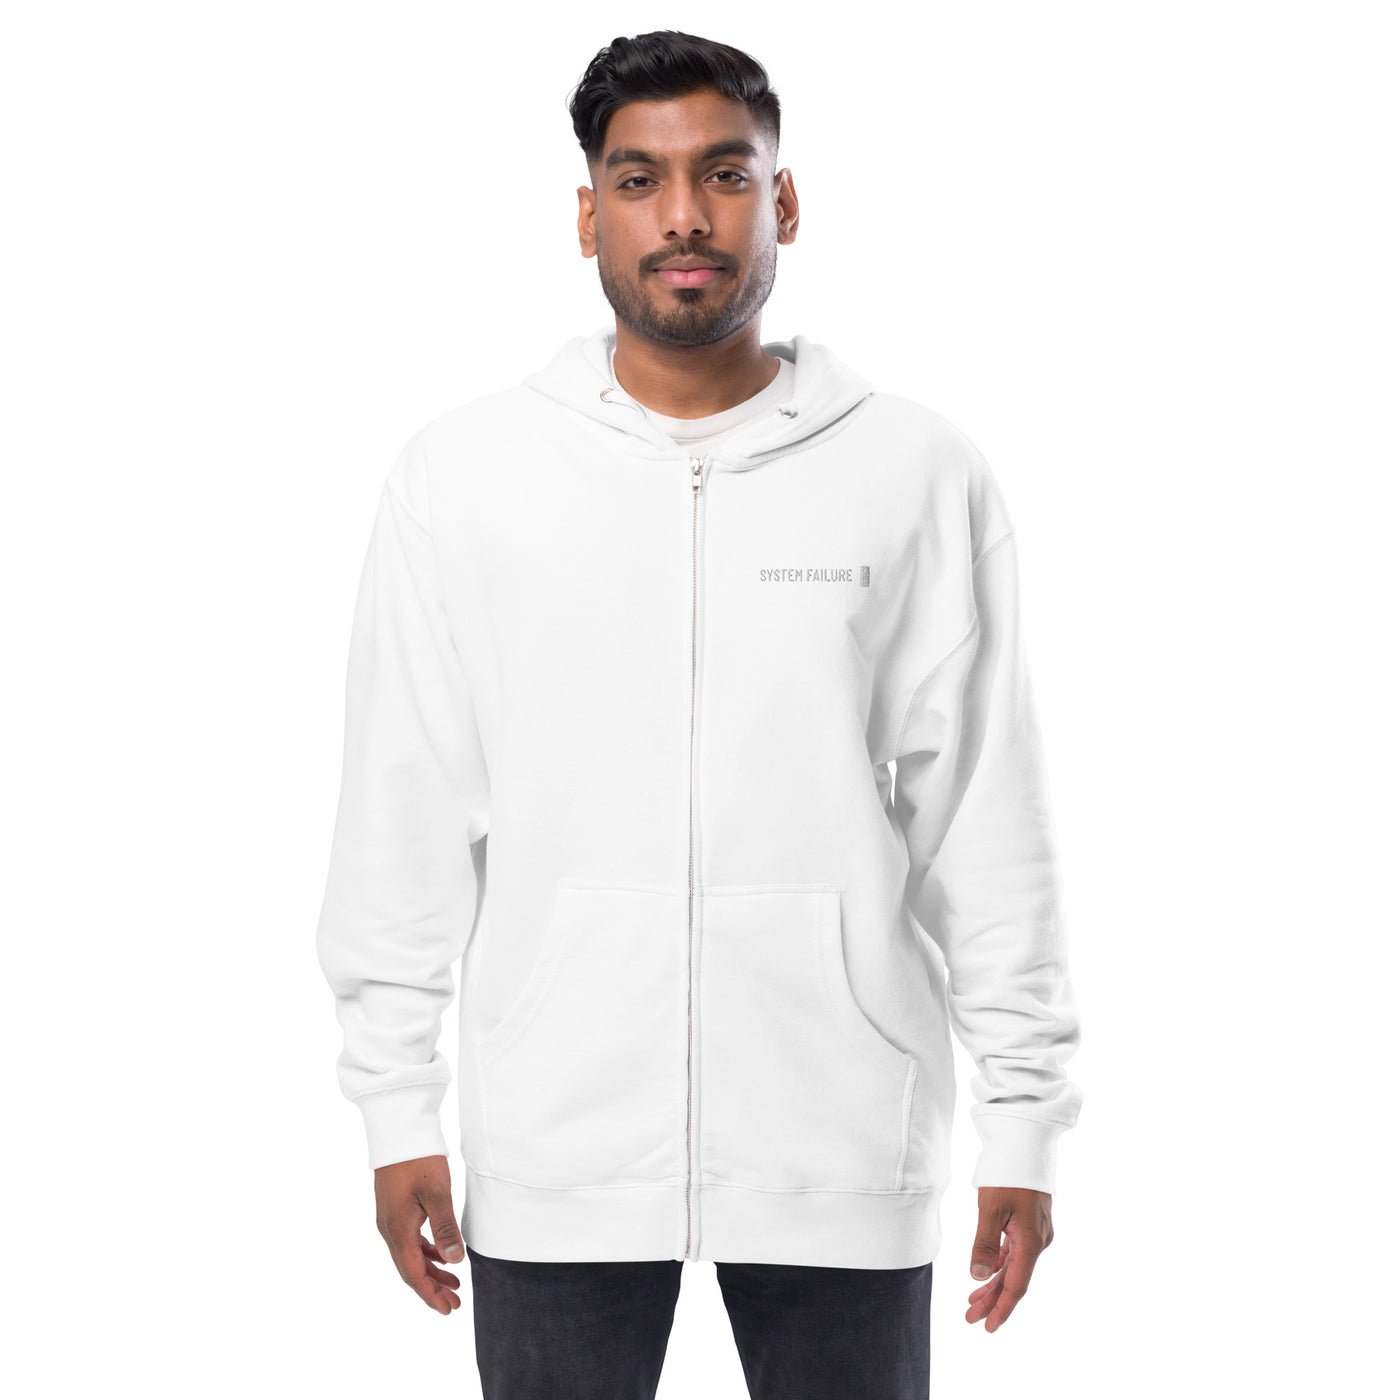 System failure - Unisex fleece zip up hoodie